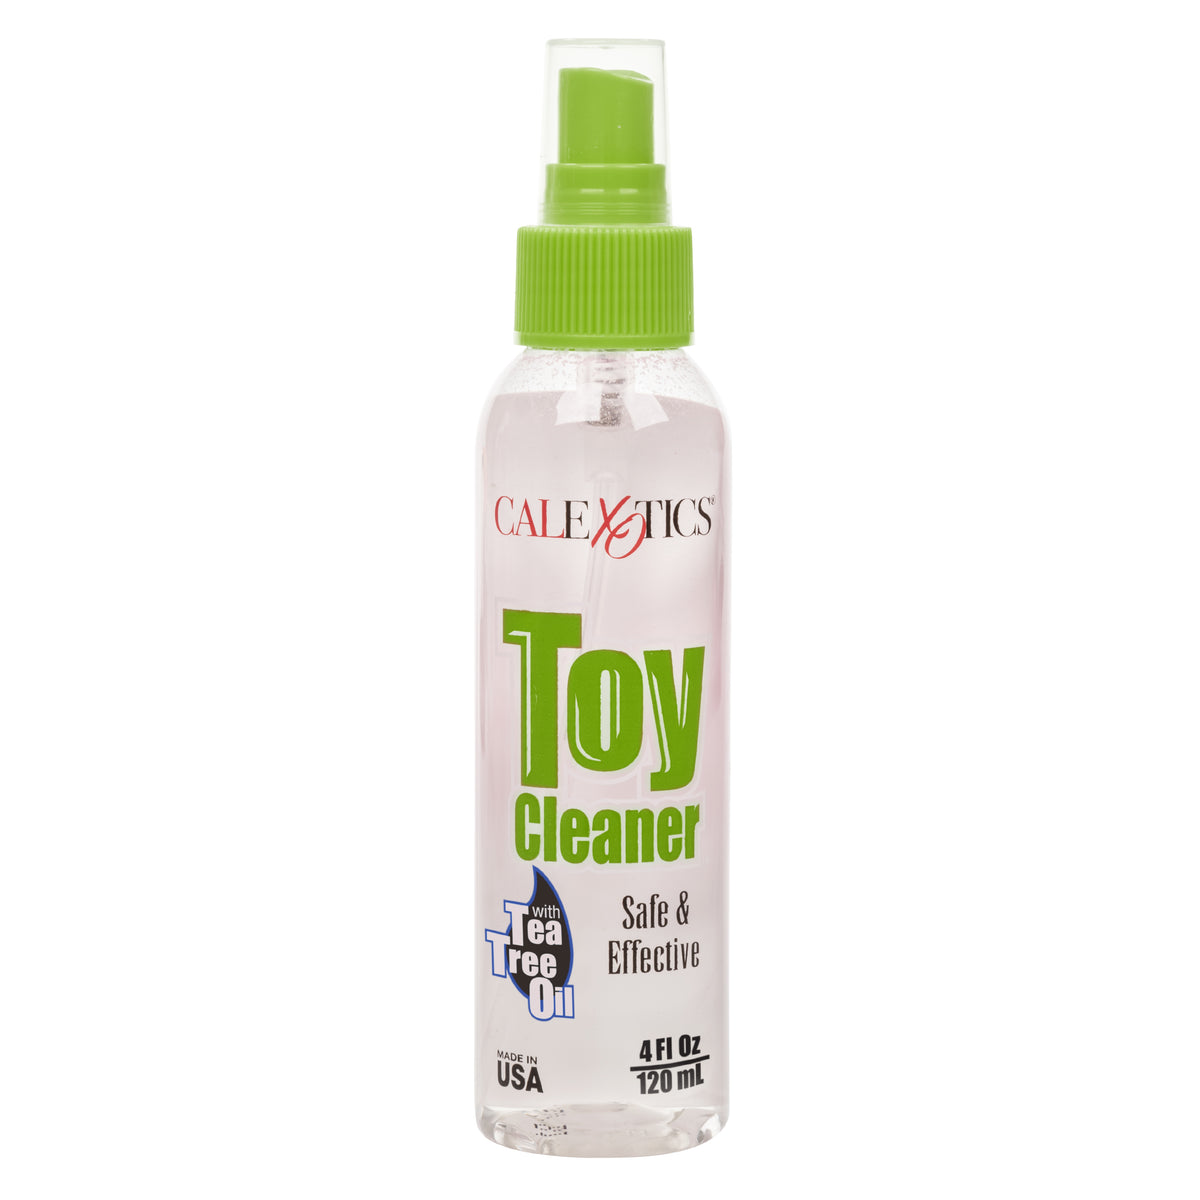 CalExotics - Toy Cleaner with Tea Tree Oil - 4 oz/120ml